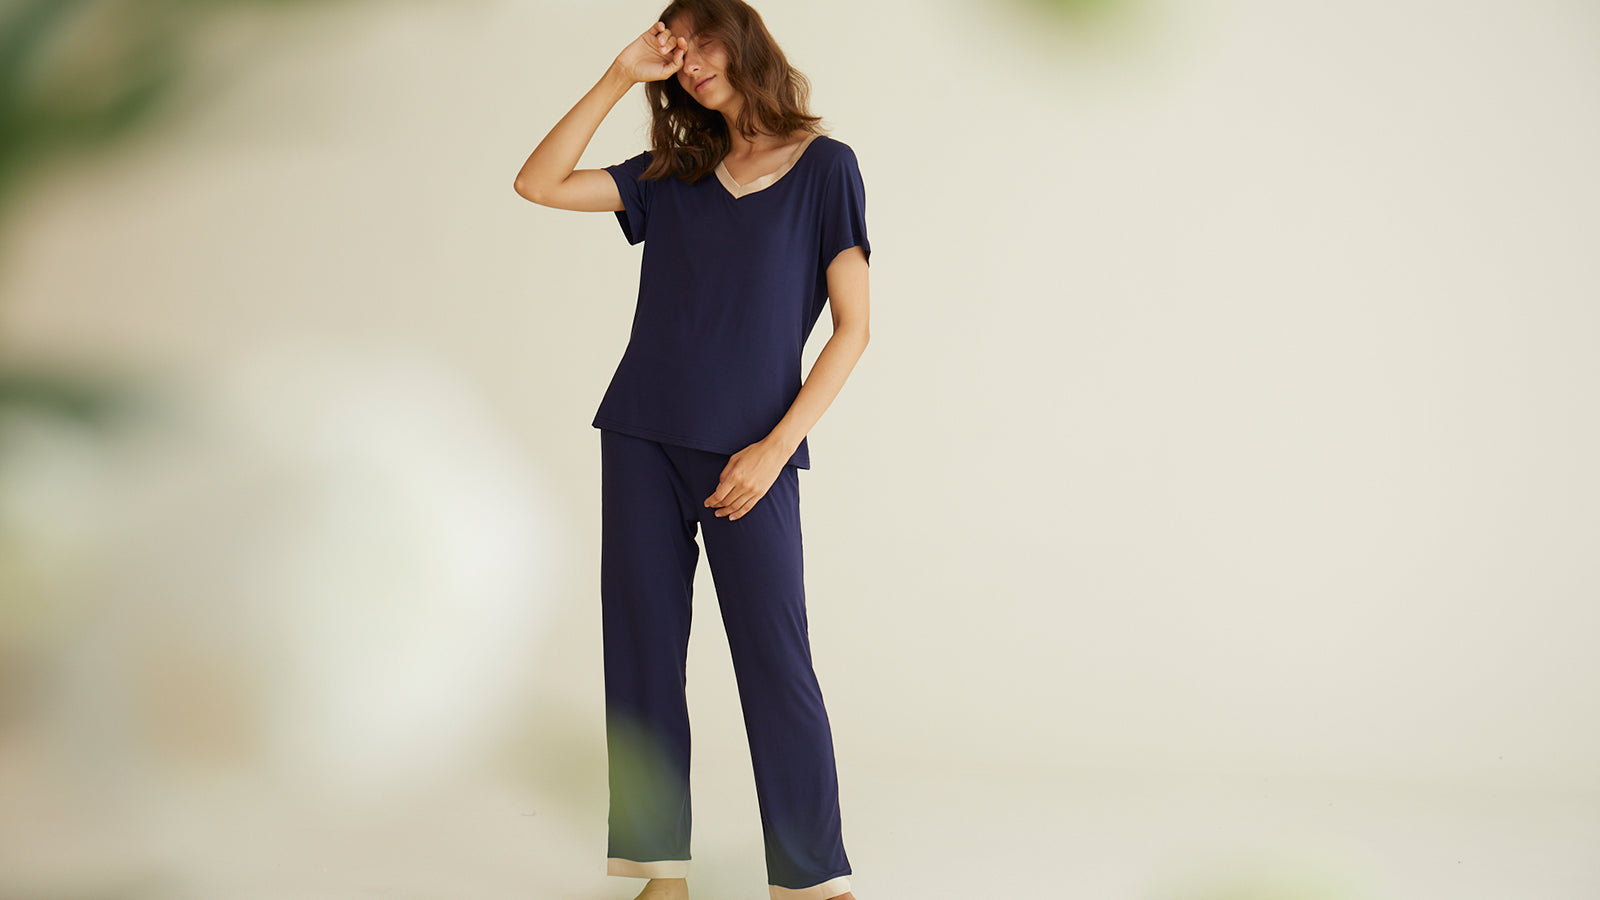 Latuza - Bamboo Viscose Pajamas for Women or Men - Soft & Comfy